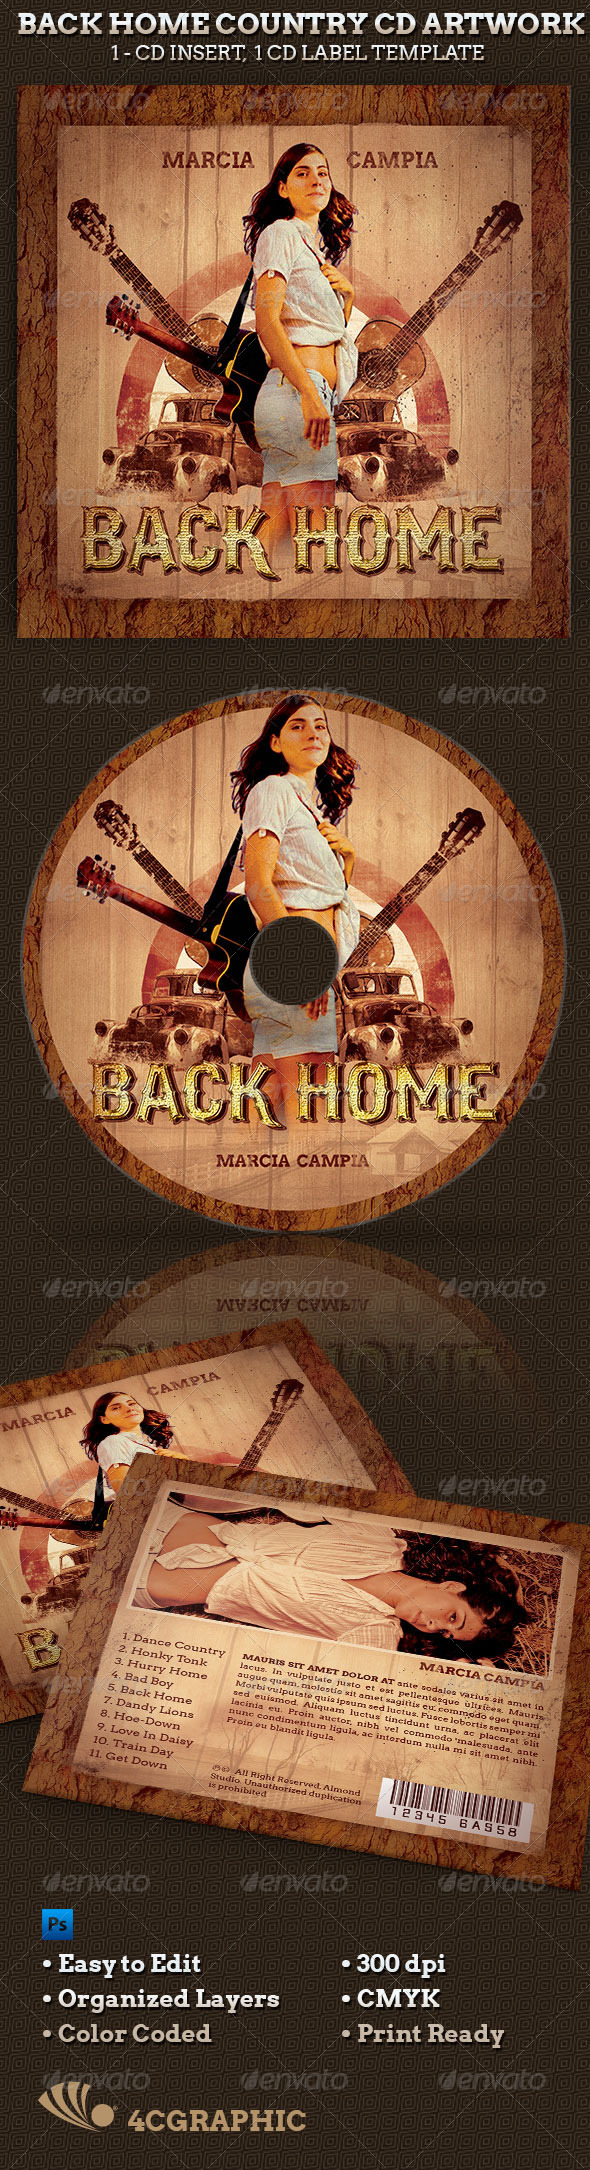 Back Home Country Music CD Artwork